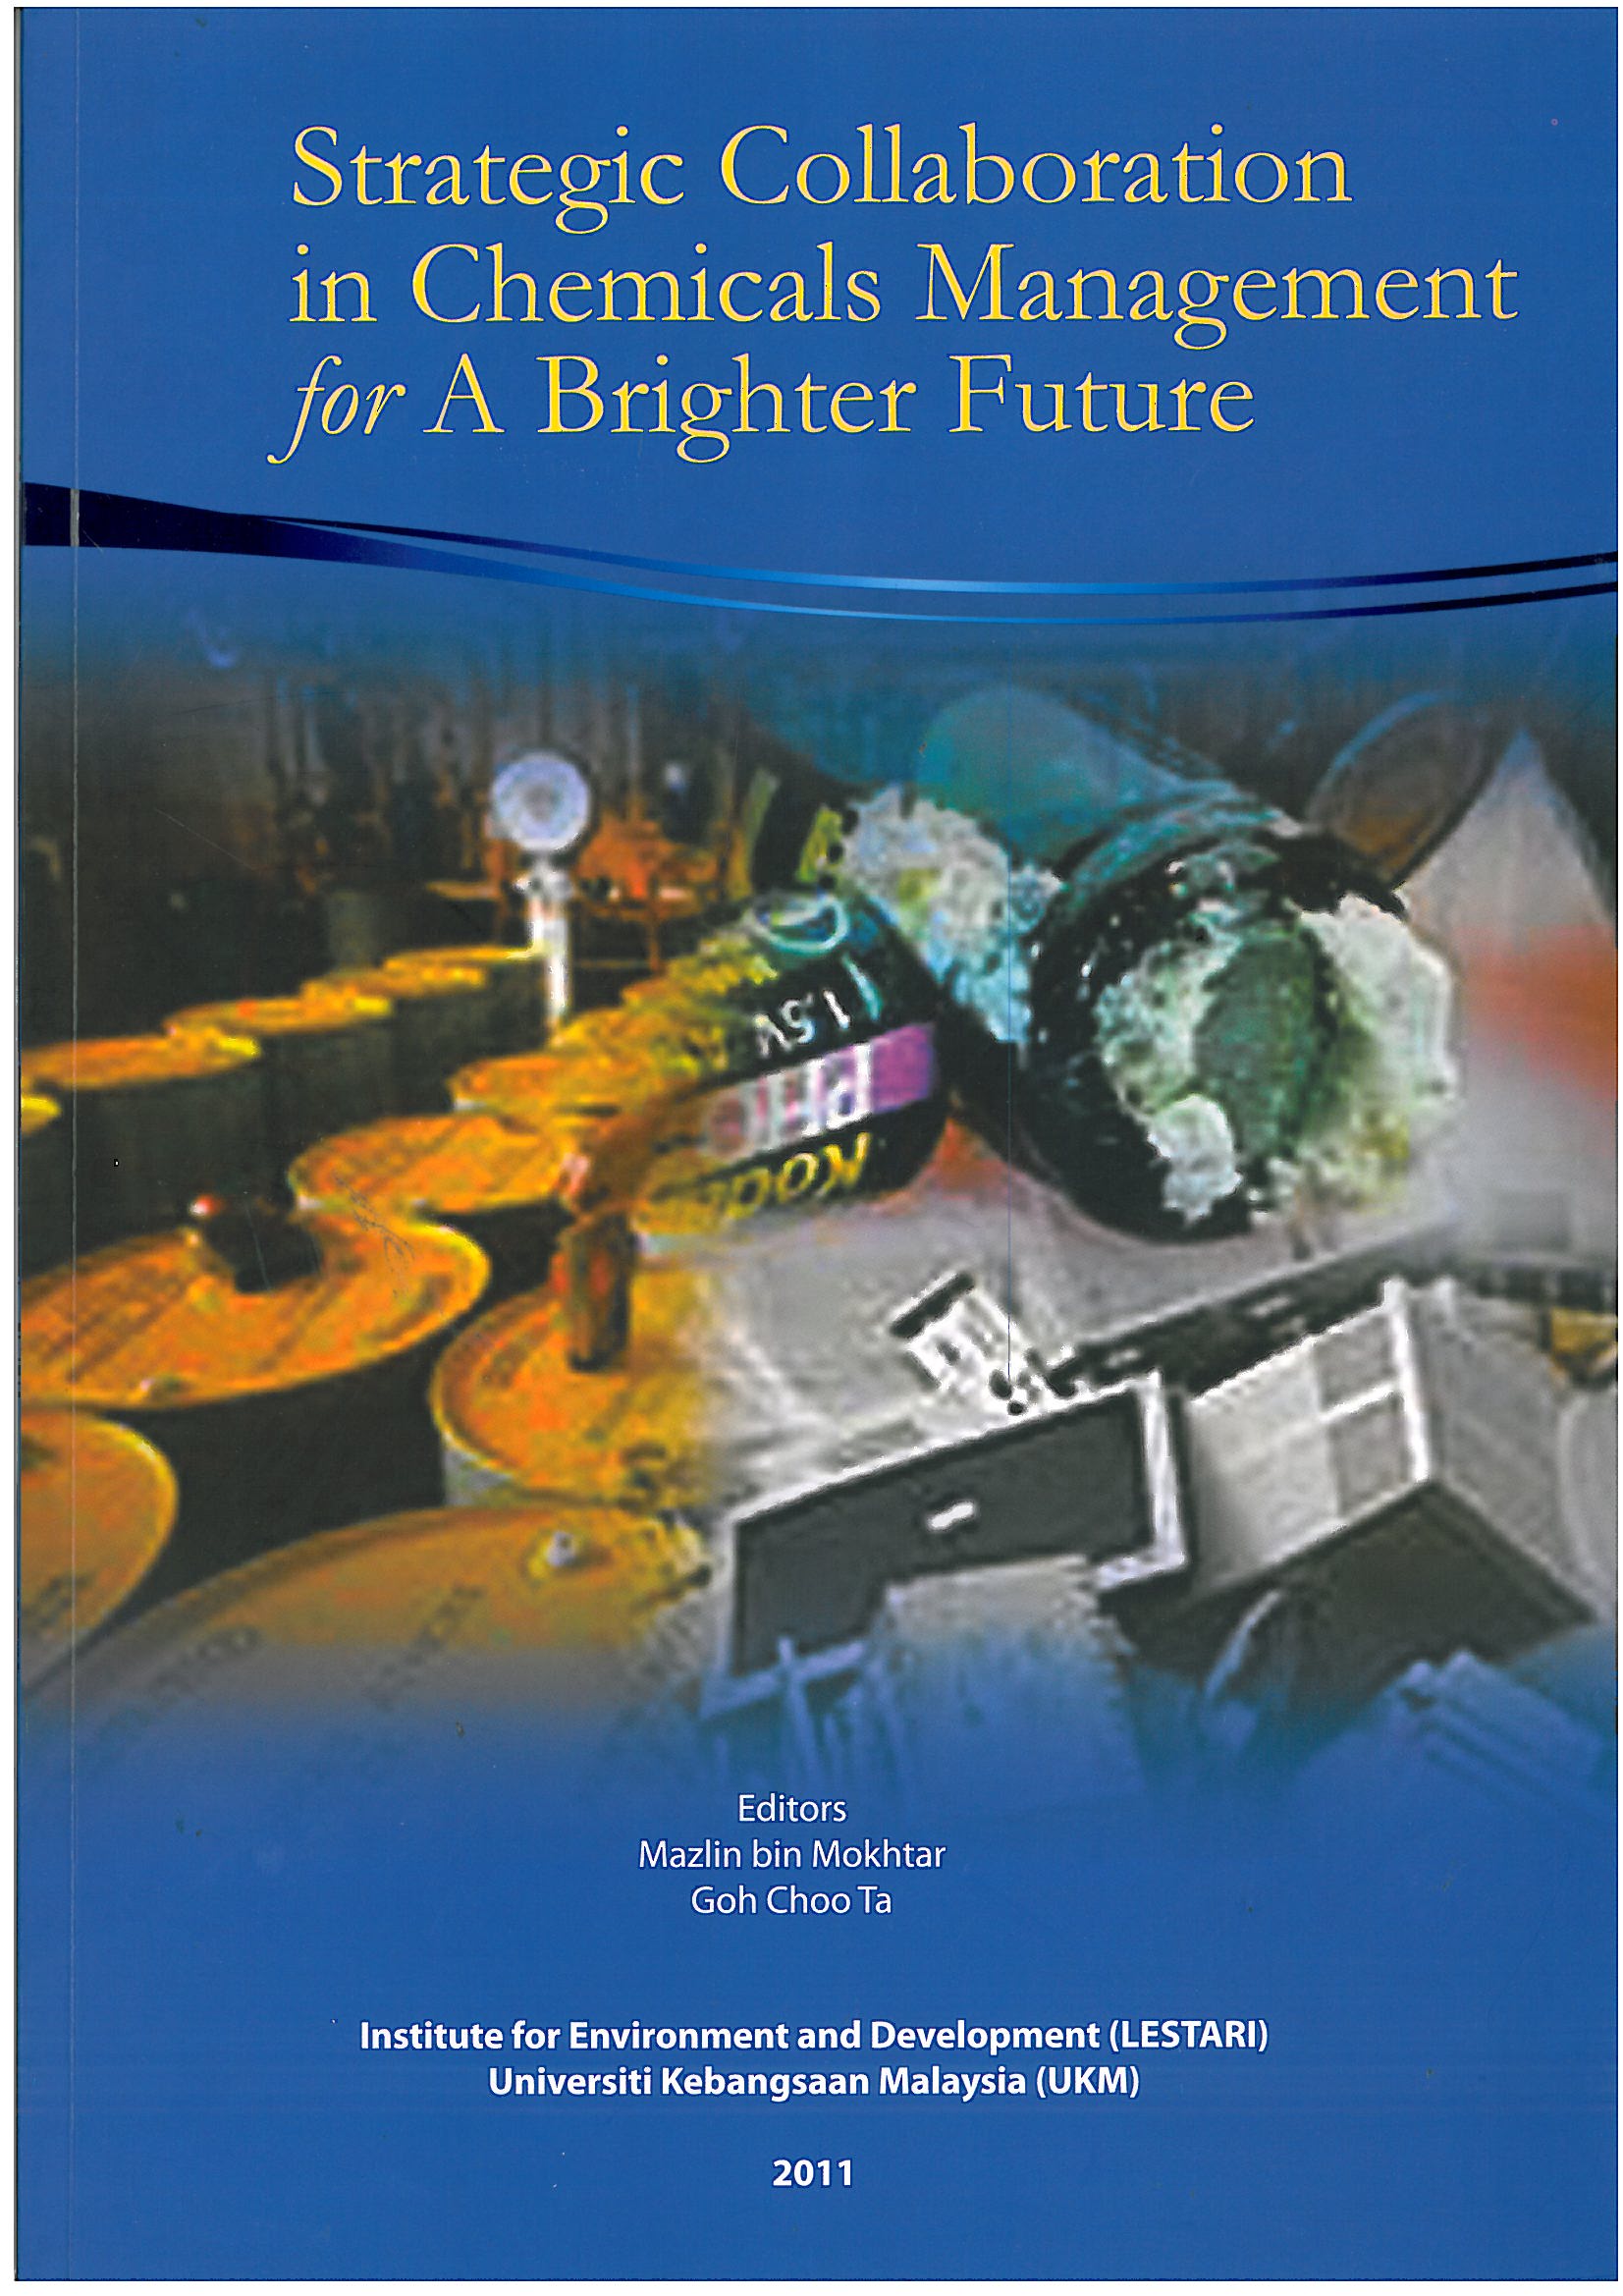 Strategic Collaboration in Chemicals Management for A Brighter Future (MyNICHE-6 & MyNICHE-7)